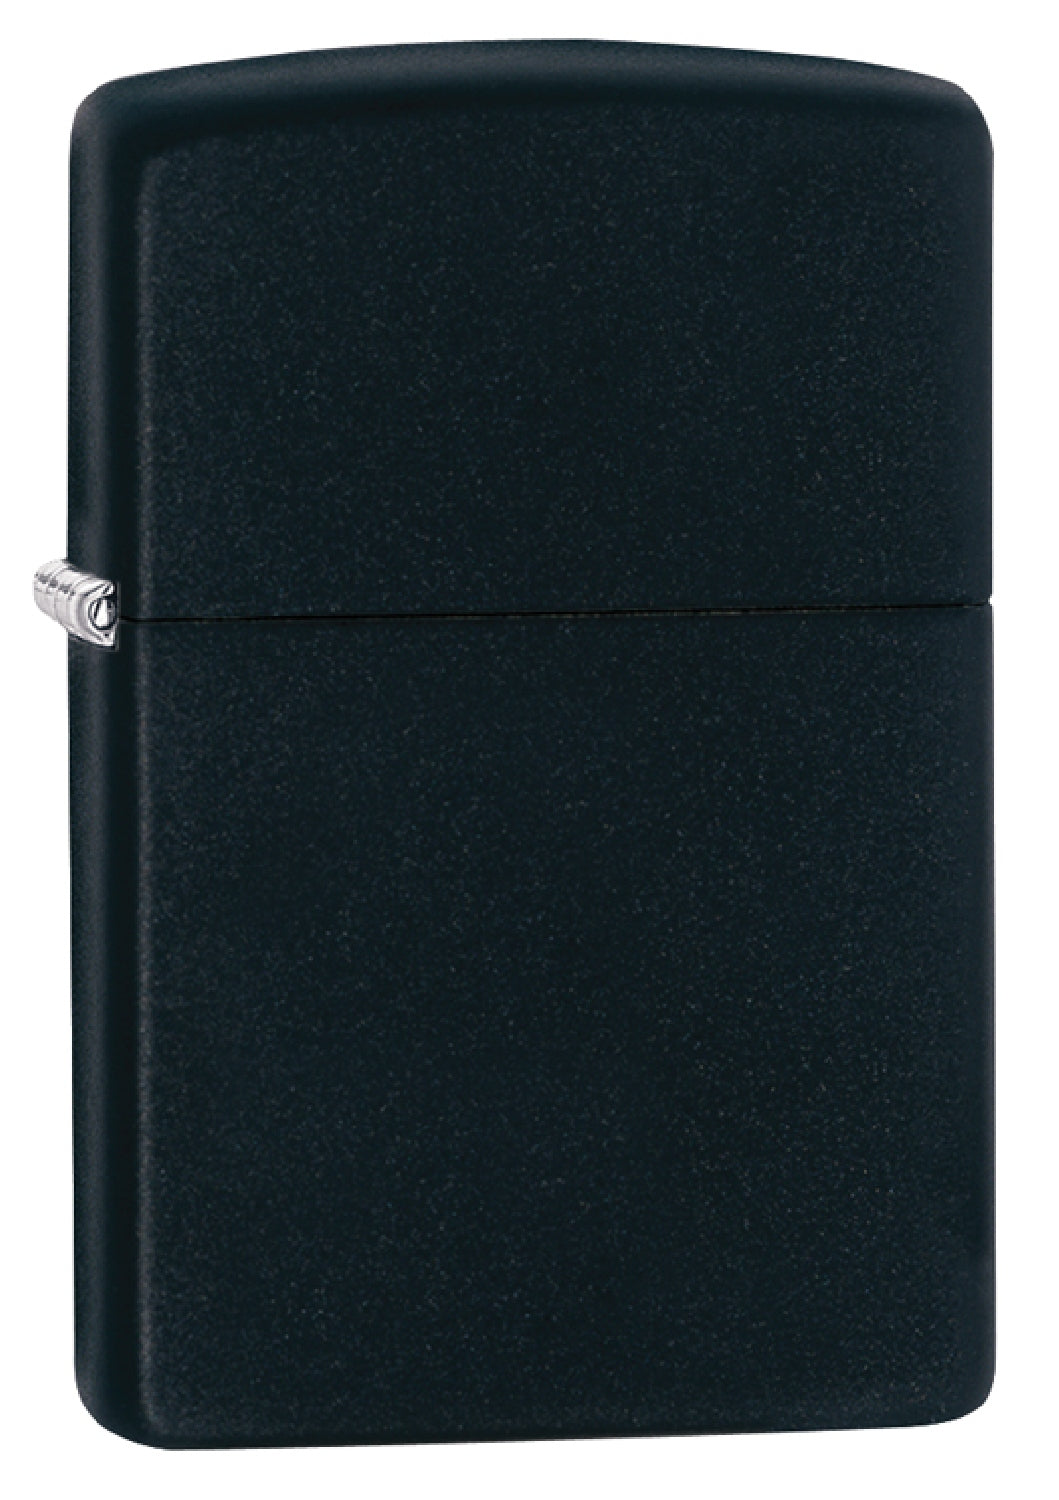 Zippo Classic Black Matte Windproof Flame Lighter